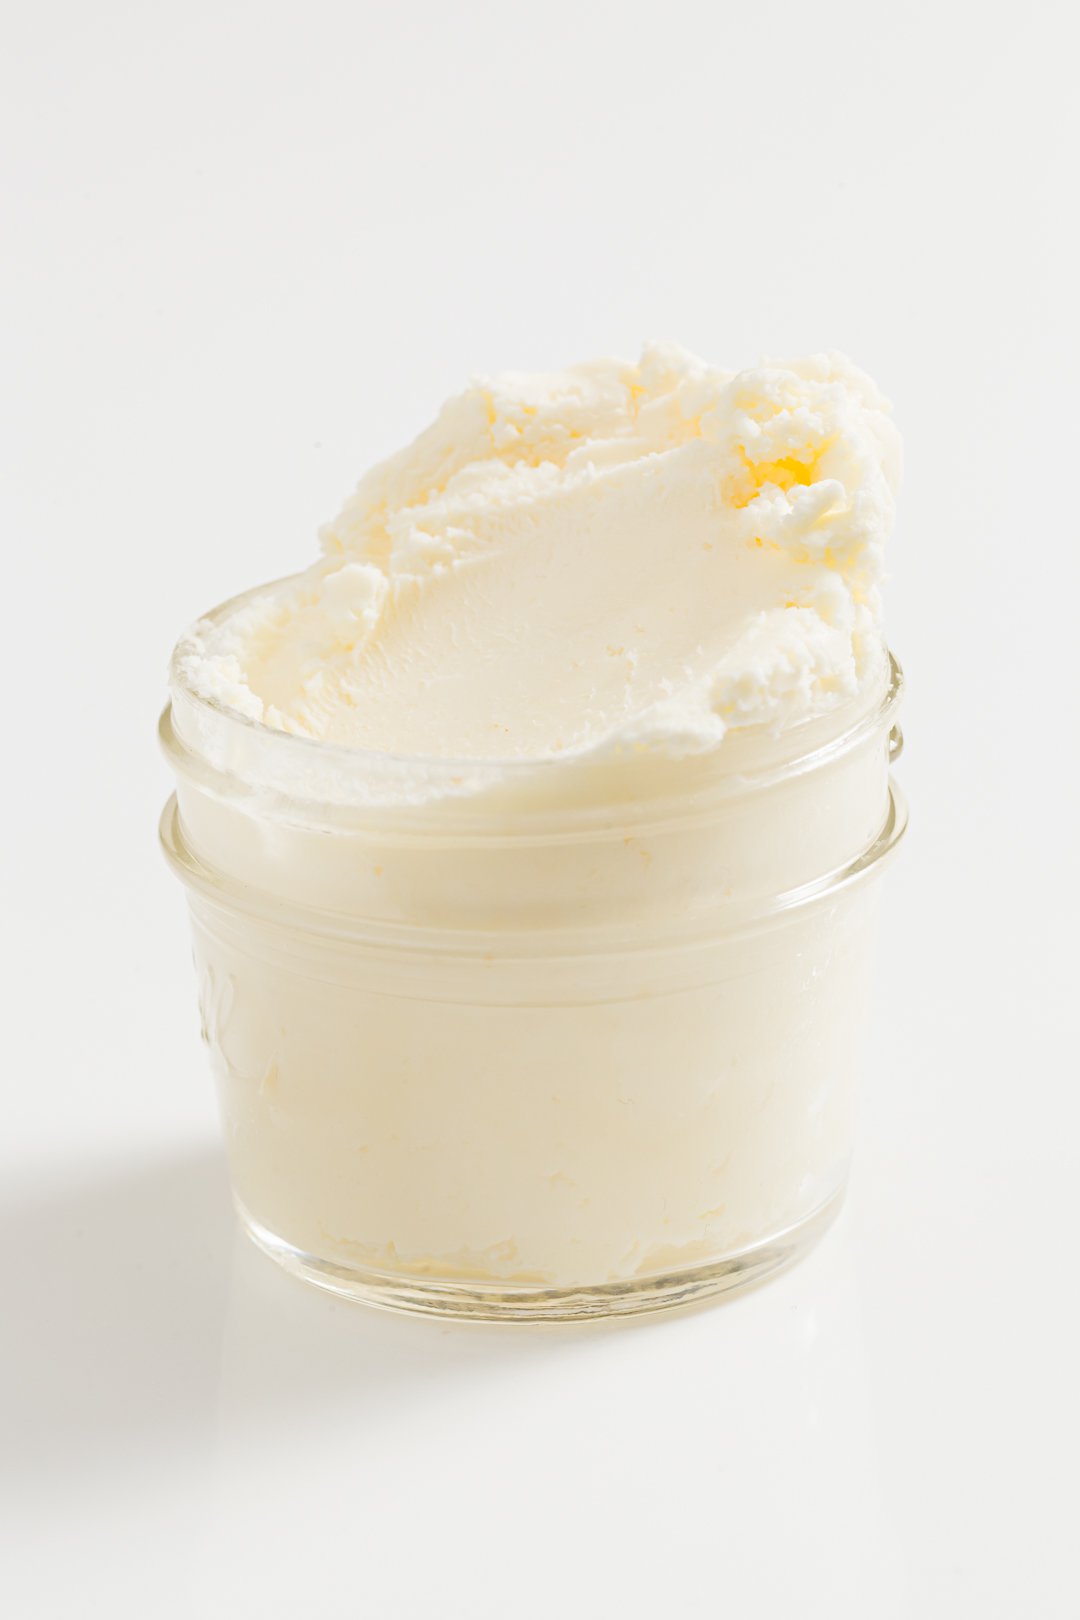 A jar full of clotted cream